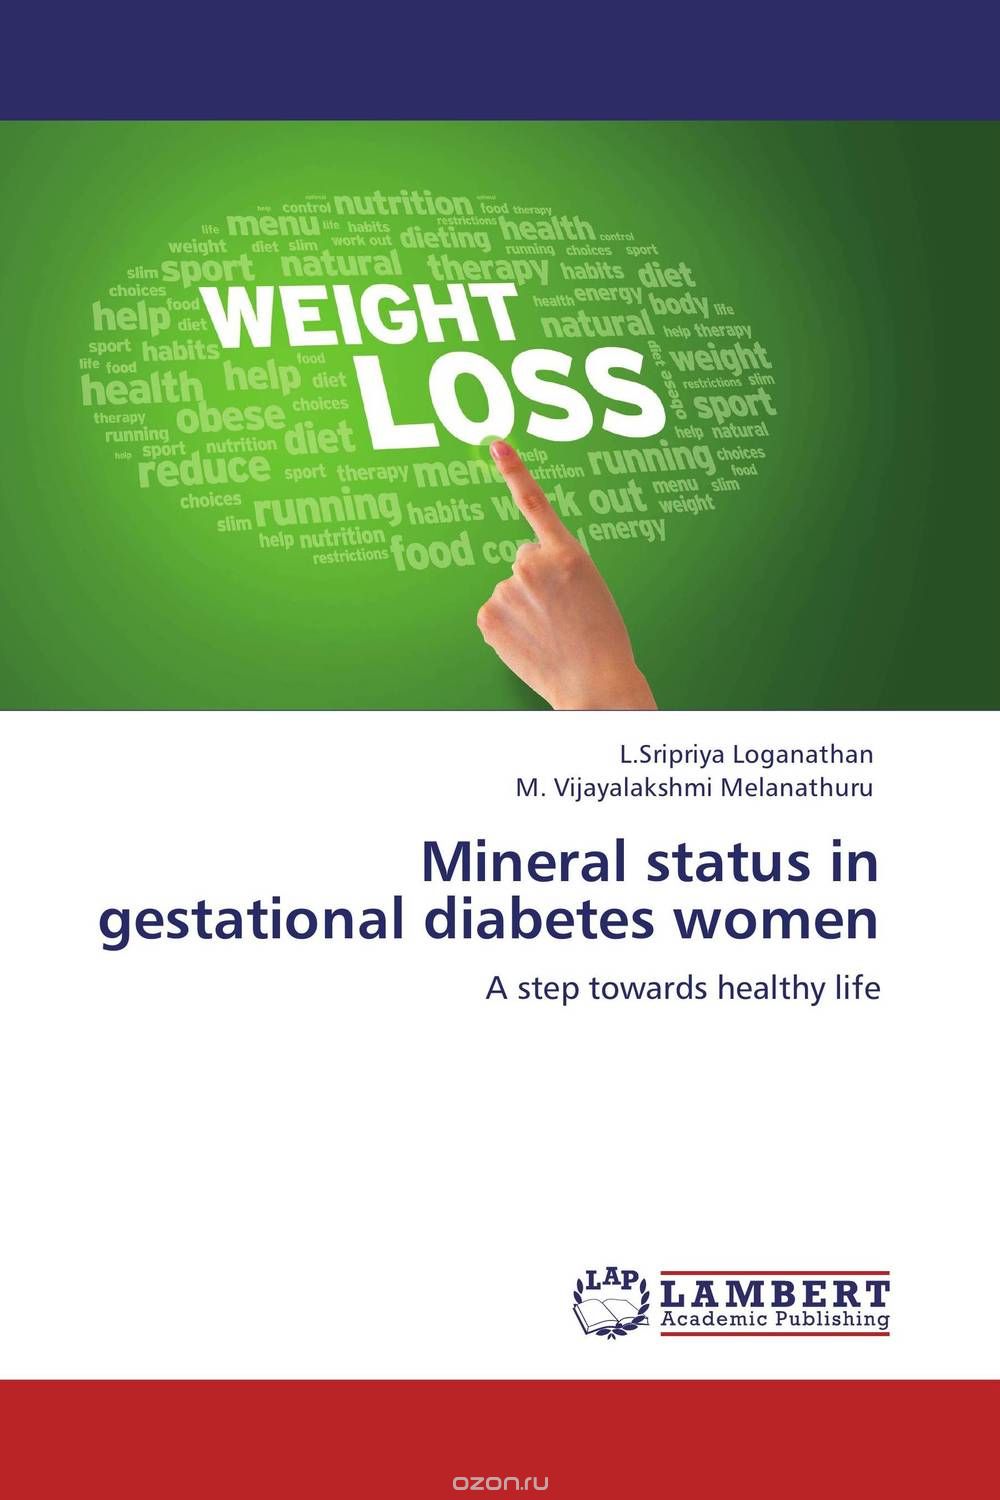 Скачать книгу "Mineral status in gestational diabetes women"